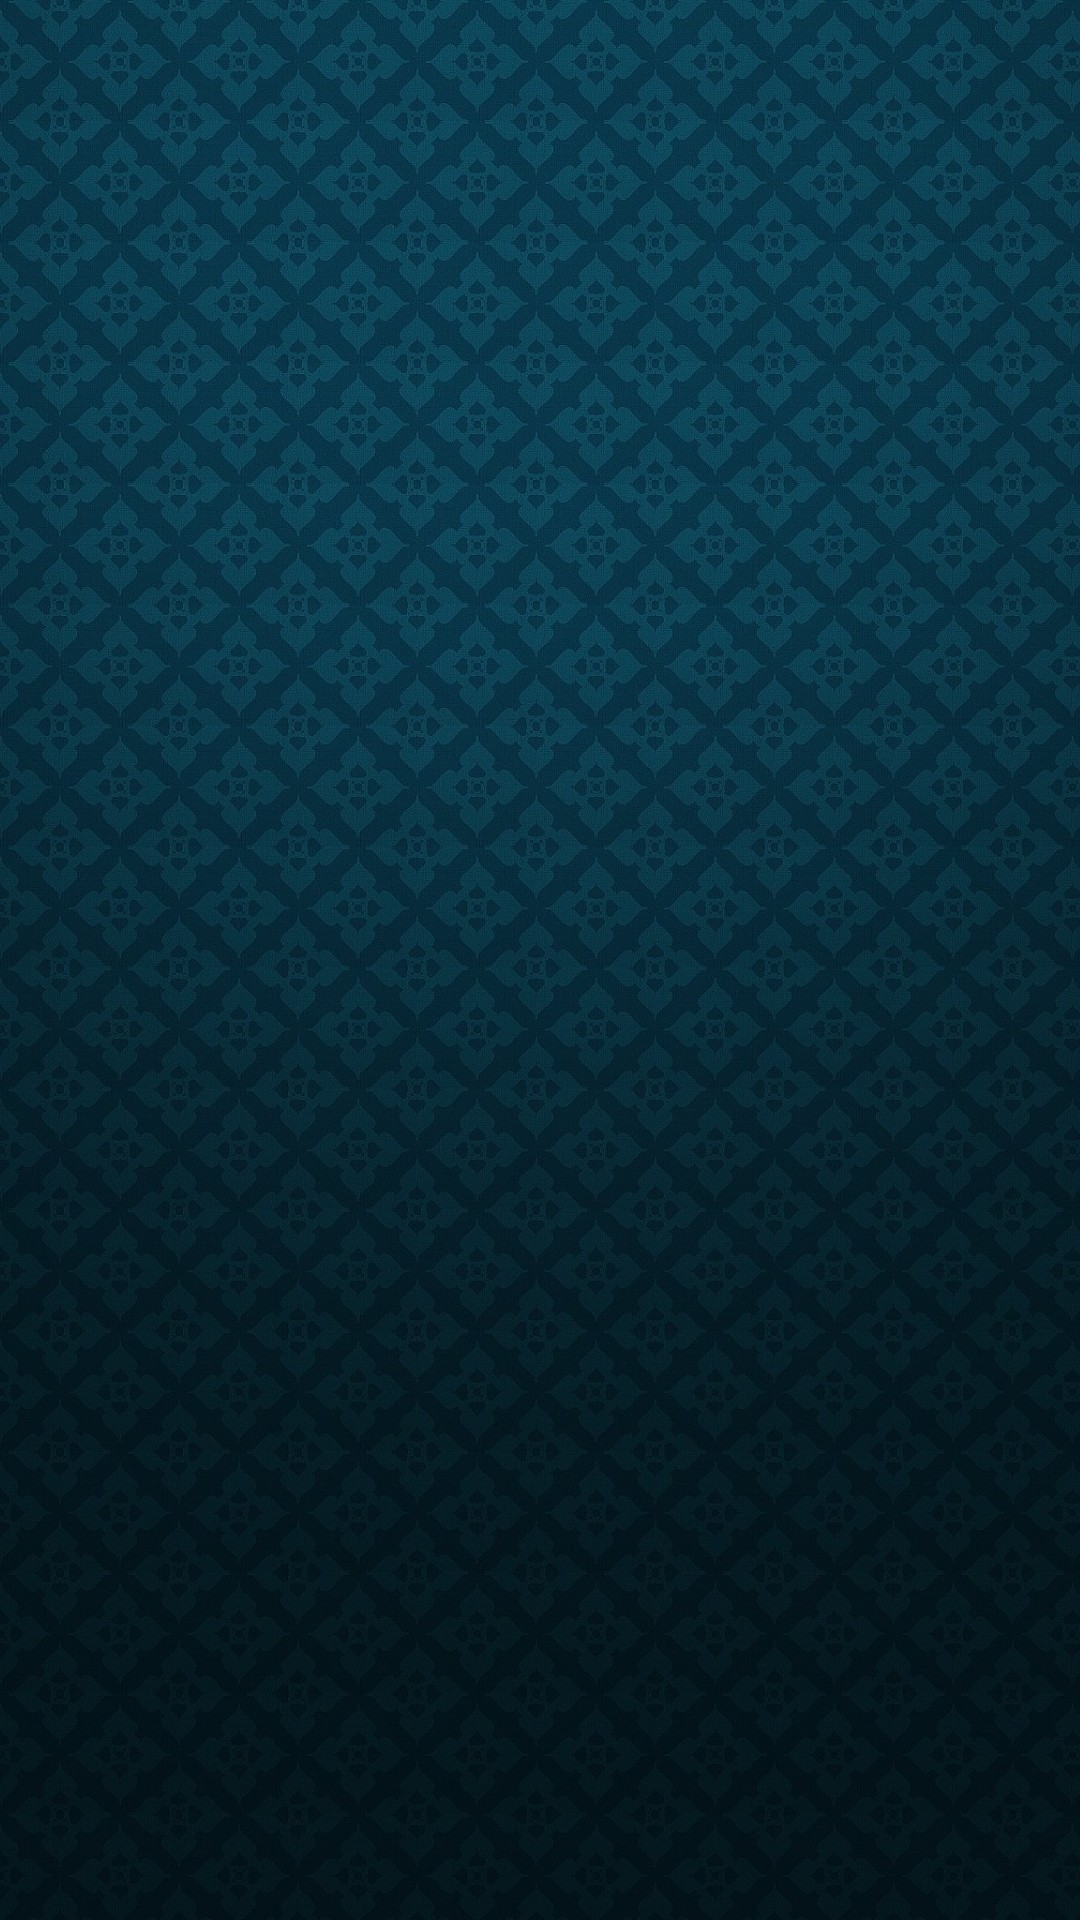 Gallery of Blue Iphone Wallpaper 8211 Nintendo Green Blue Gradation Blur Iphone 6 Wallpaper